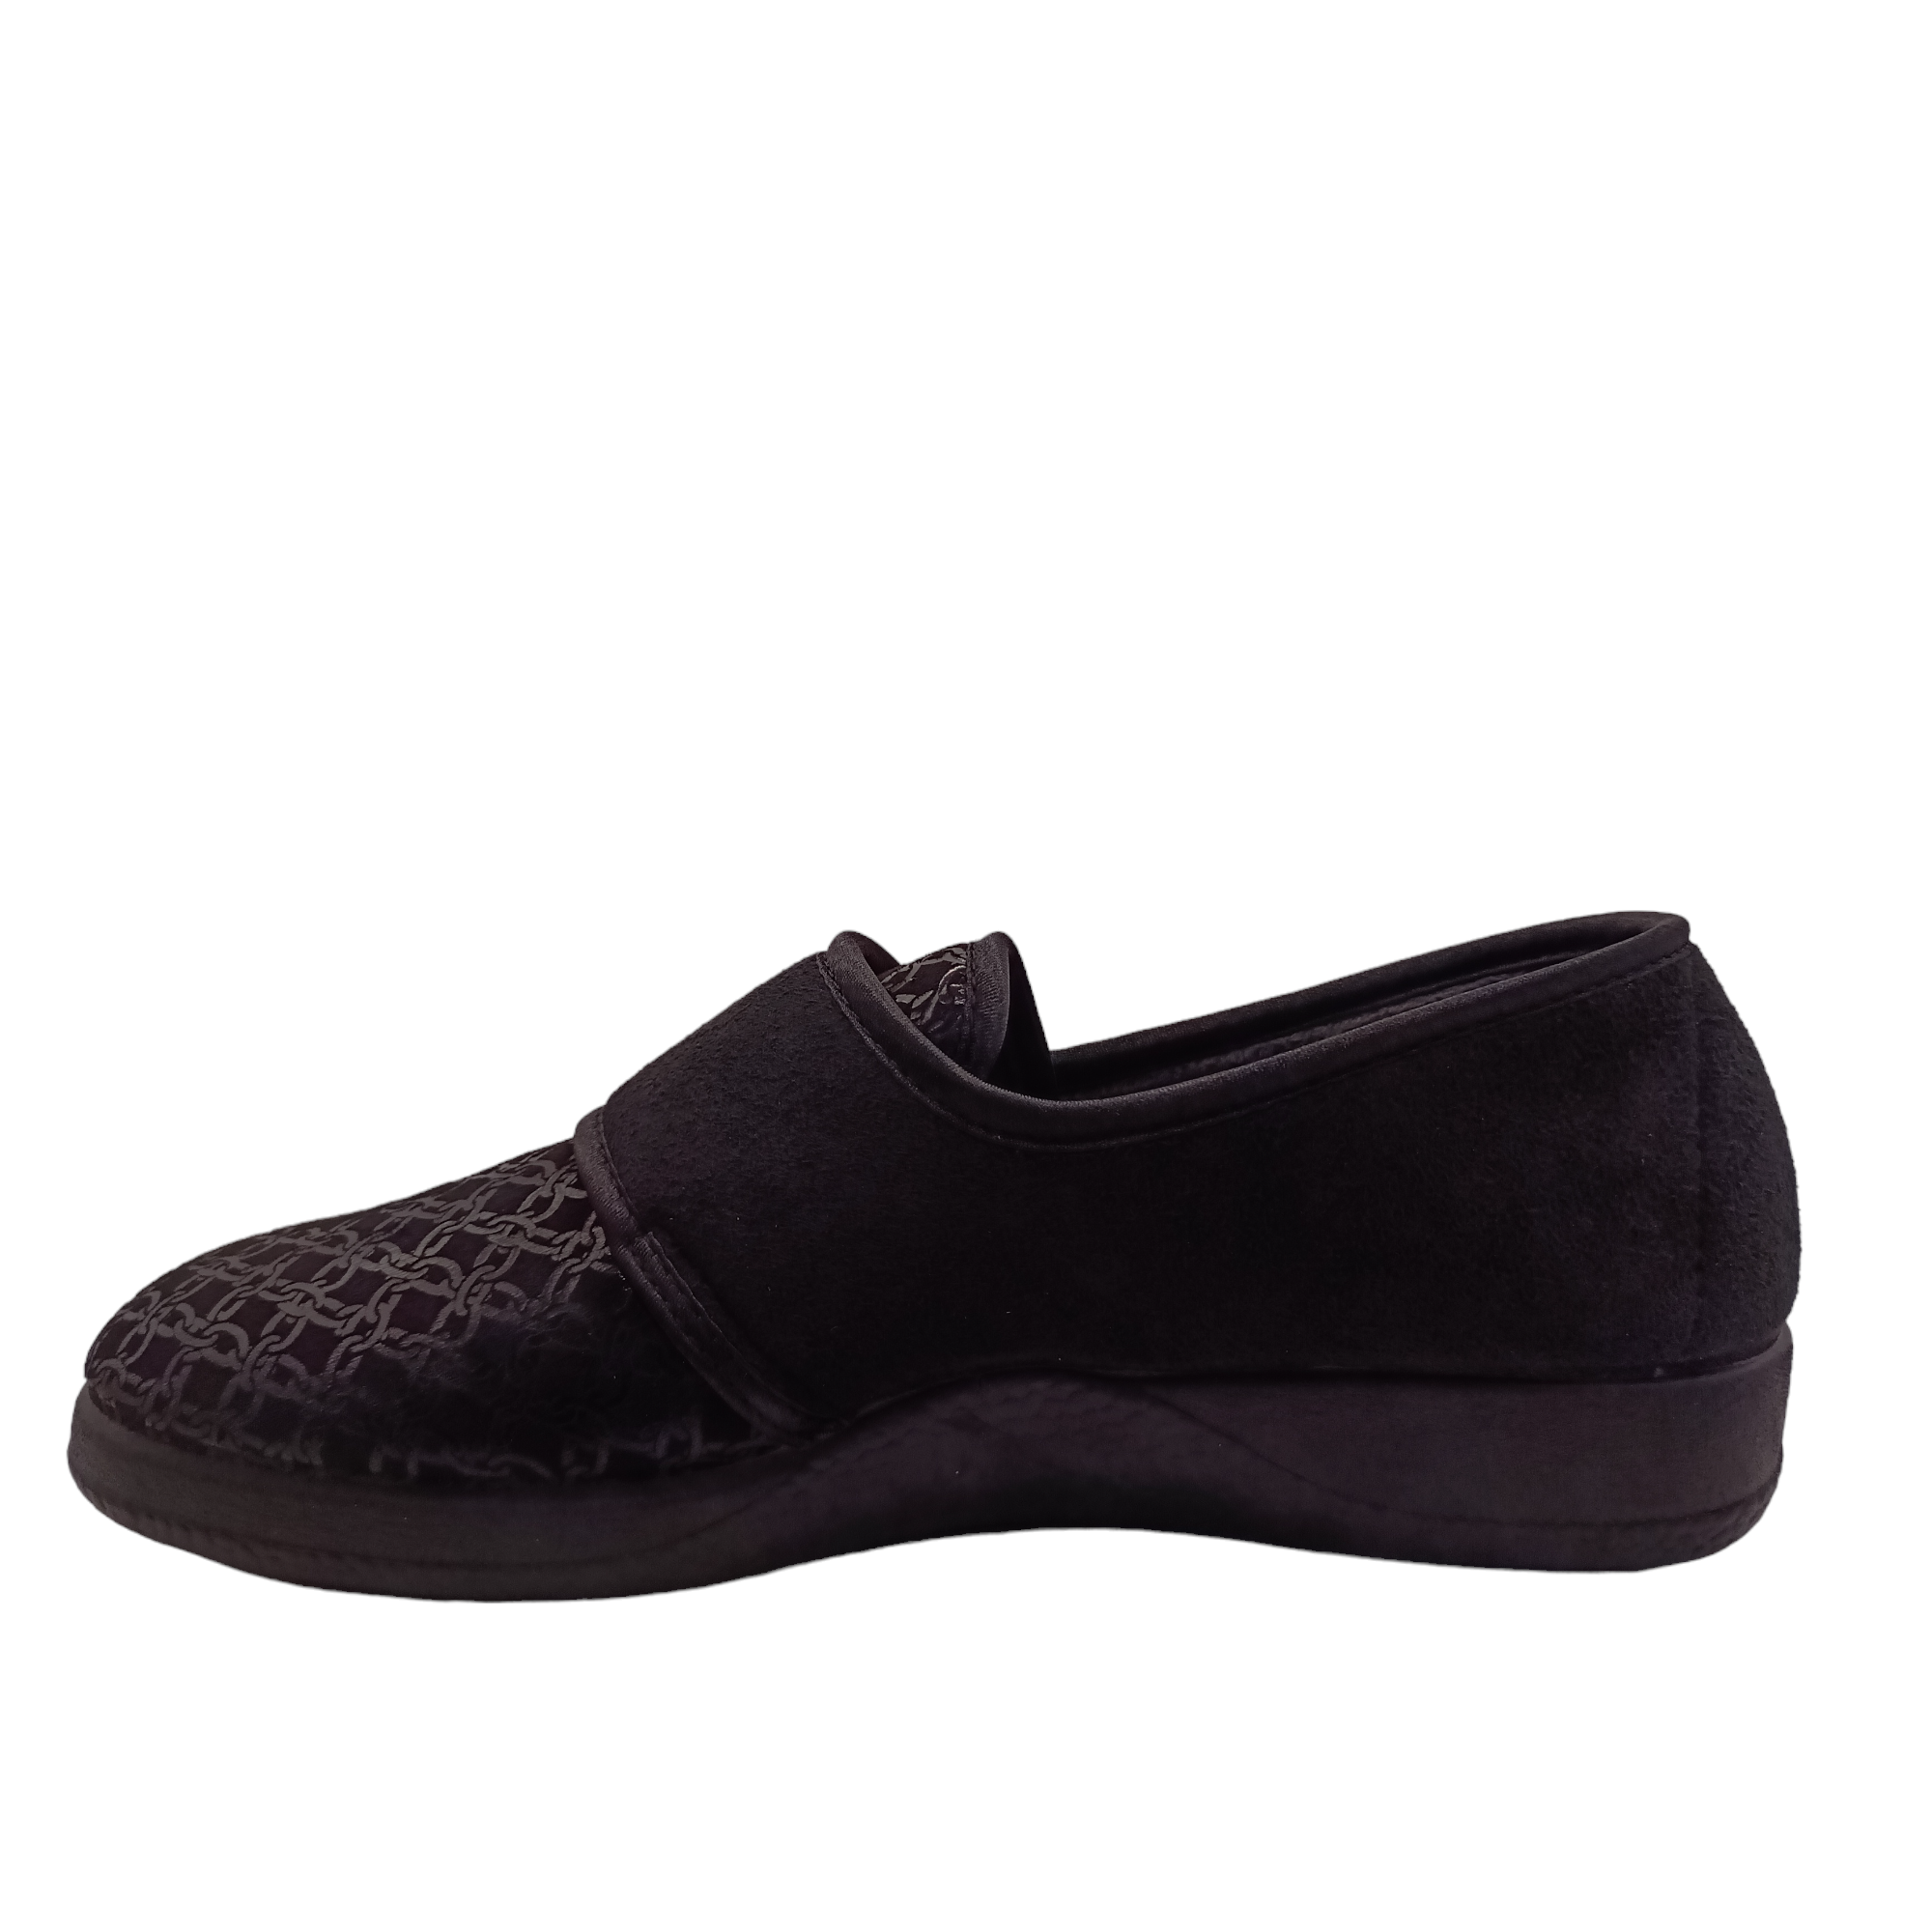 Shop Cadenas DeValverde - with shoe&amp;me - from DeValverde - Slippers - Slipper, Winter, Womens - [collection]